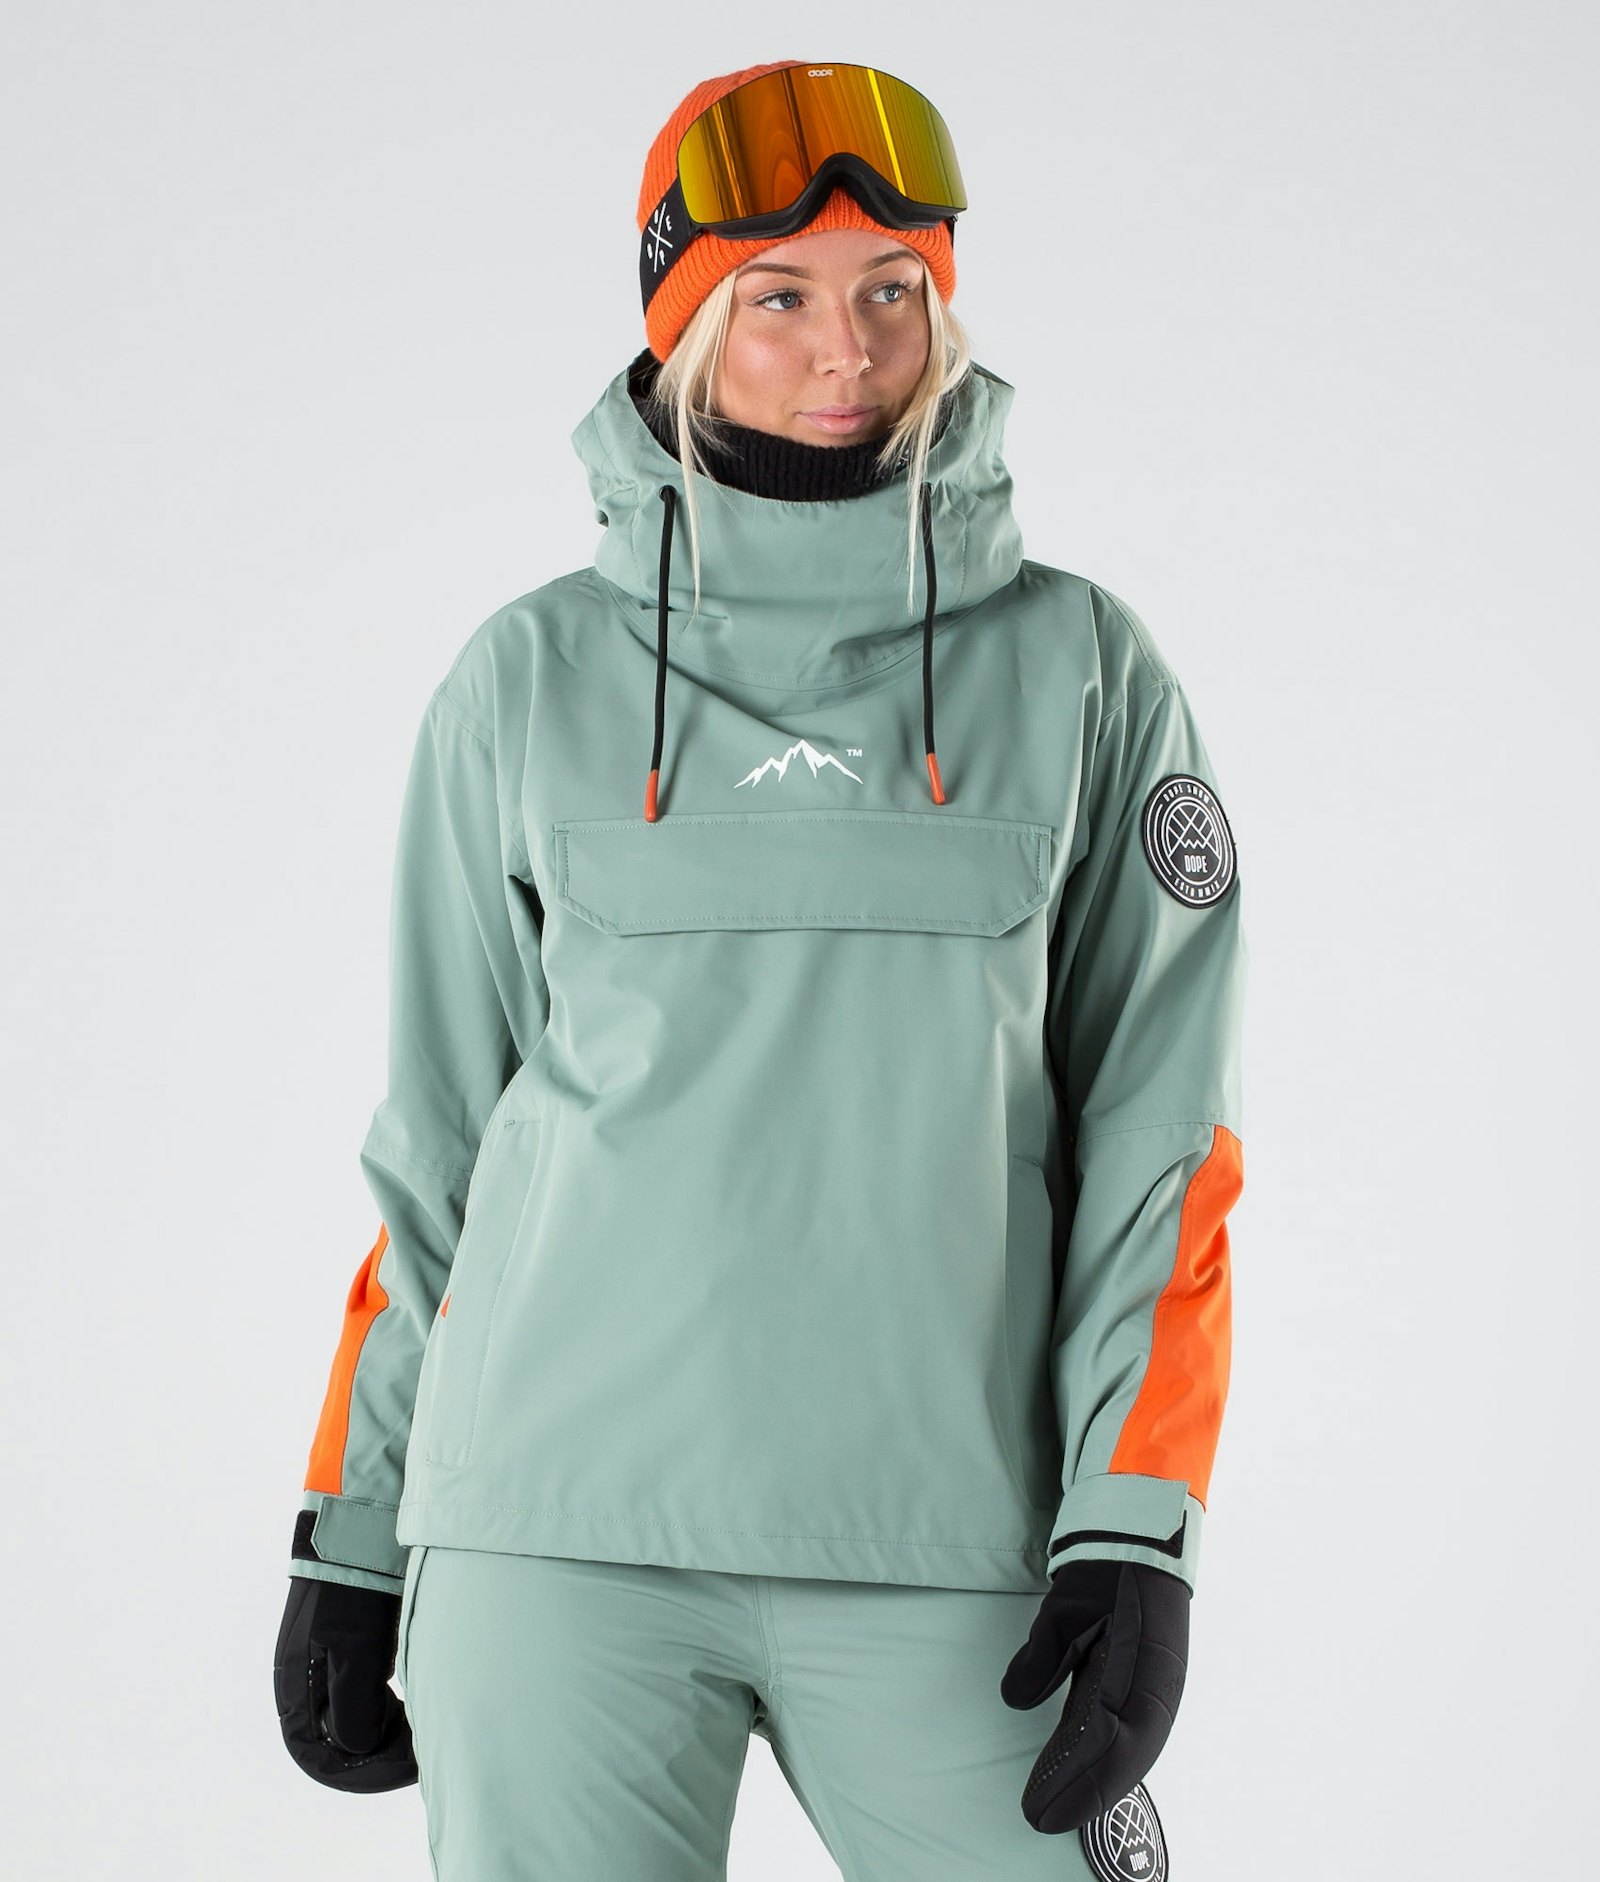 Dope Blizzard W 2019 Snowboard Jacket Women Limited Edition Faded Green Orange